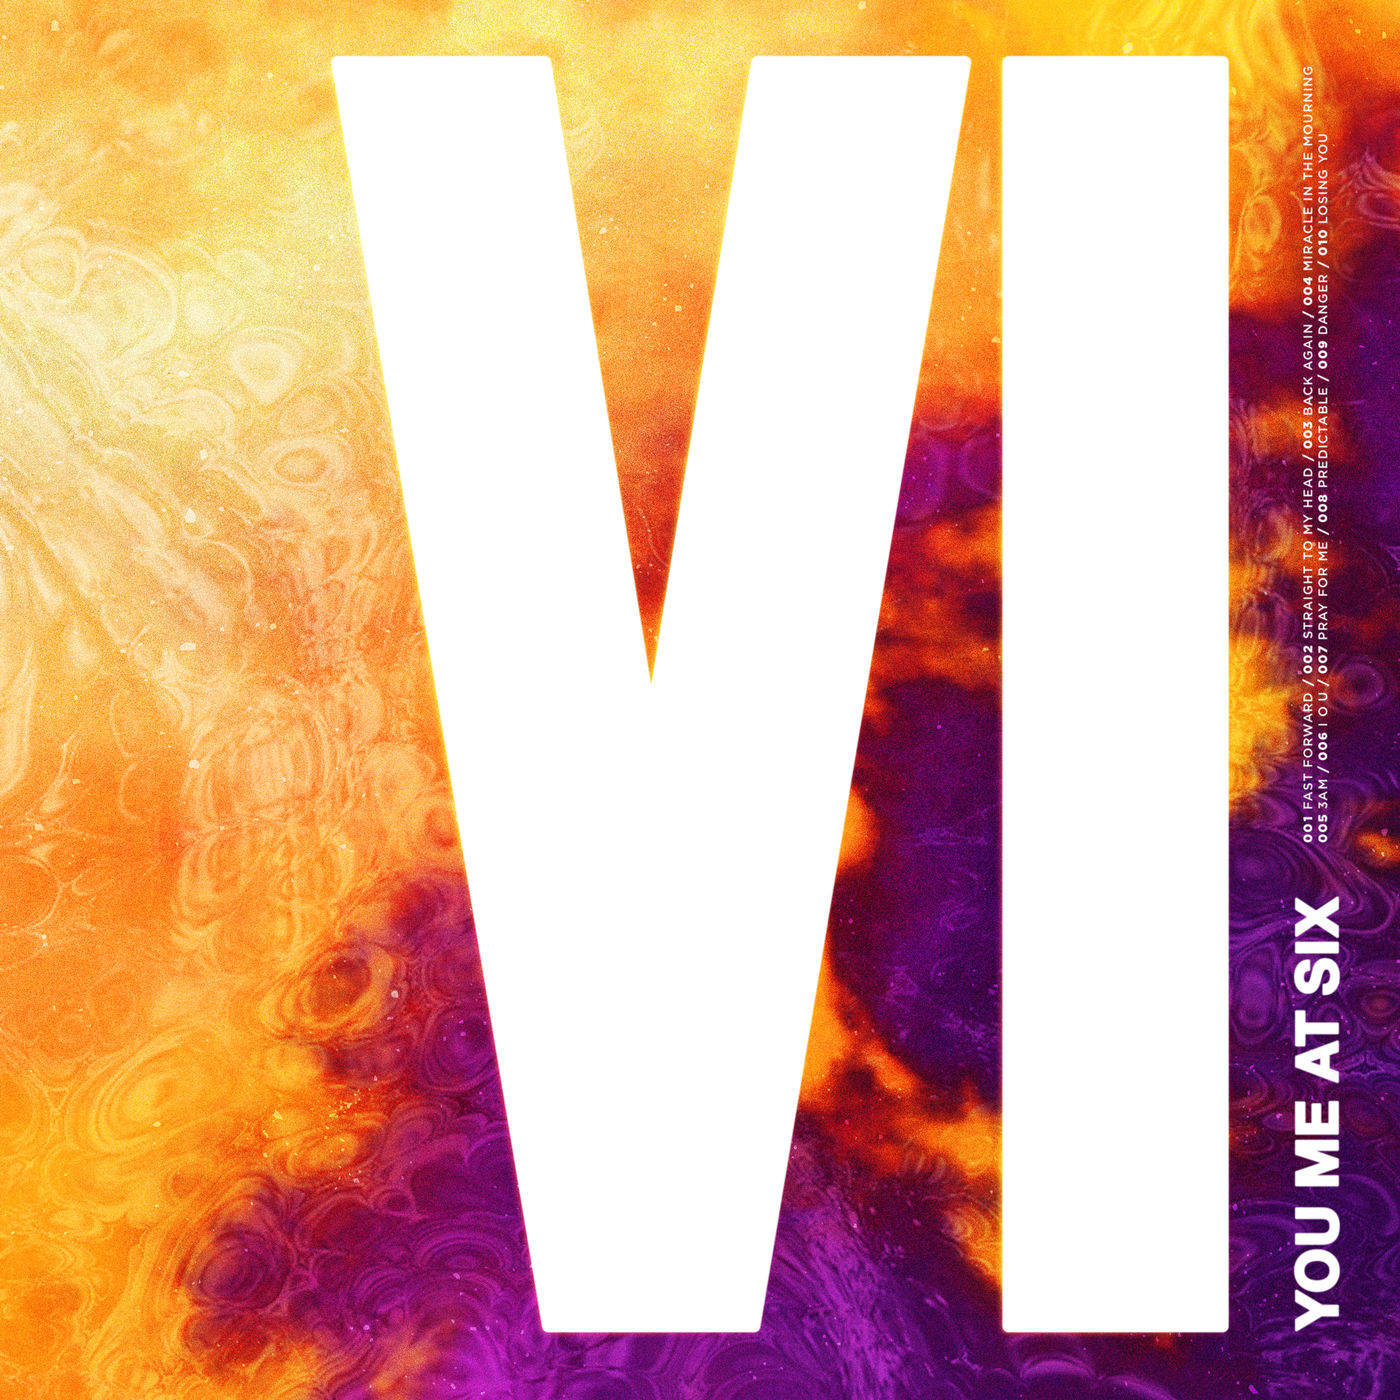 You Me At Six - VI (2018) Album Info